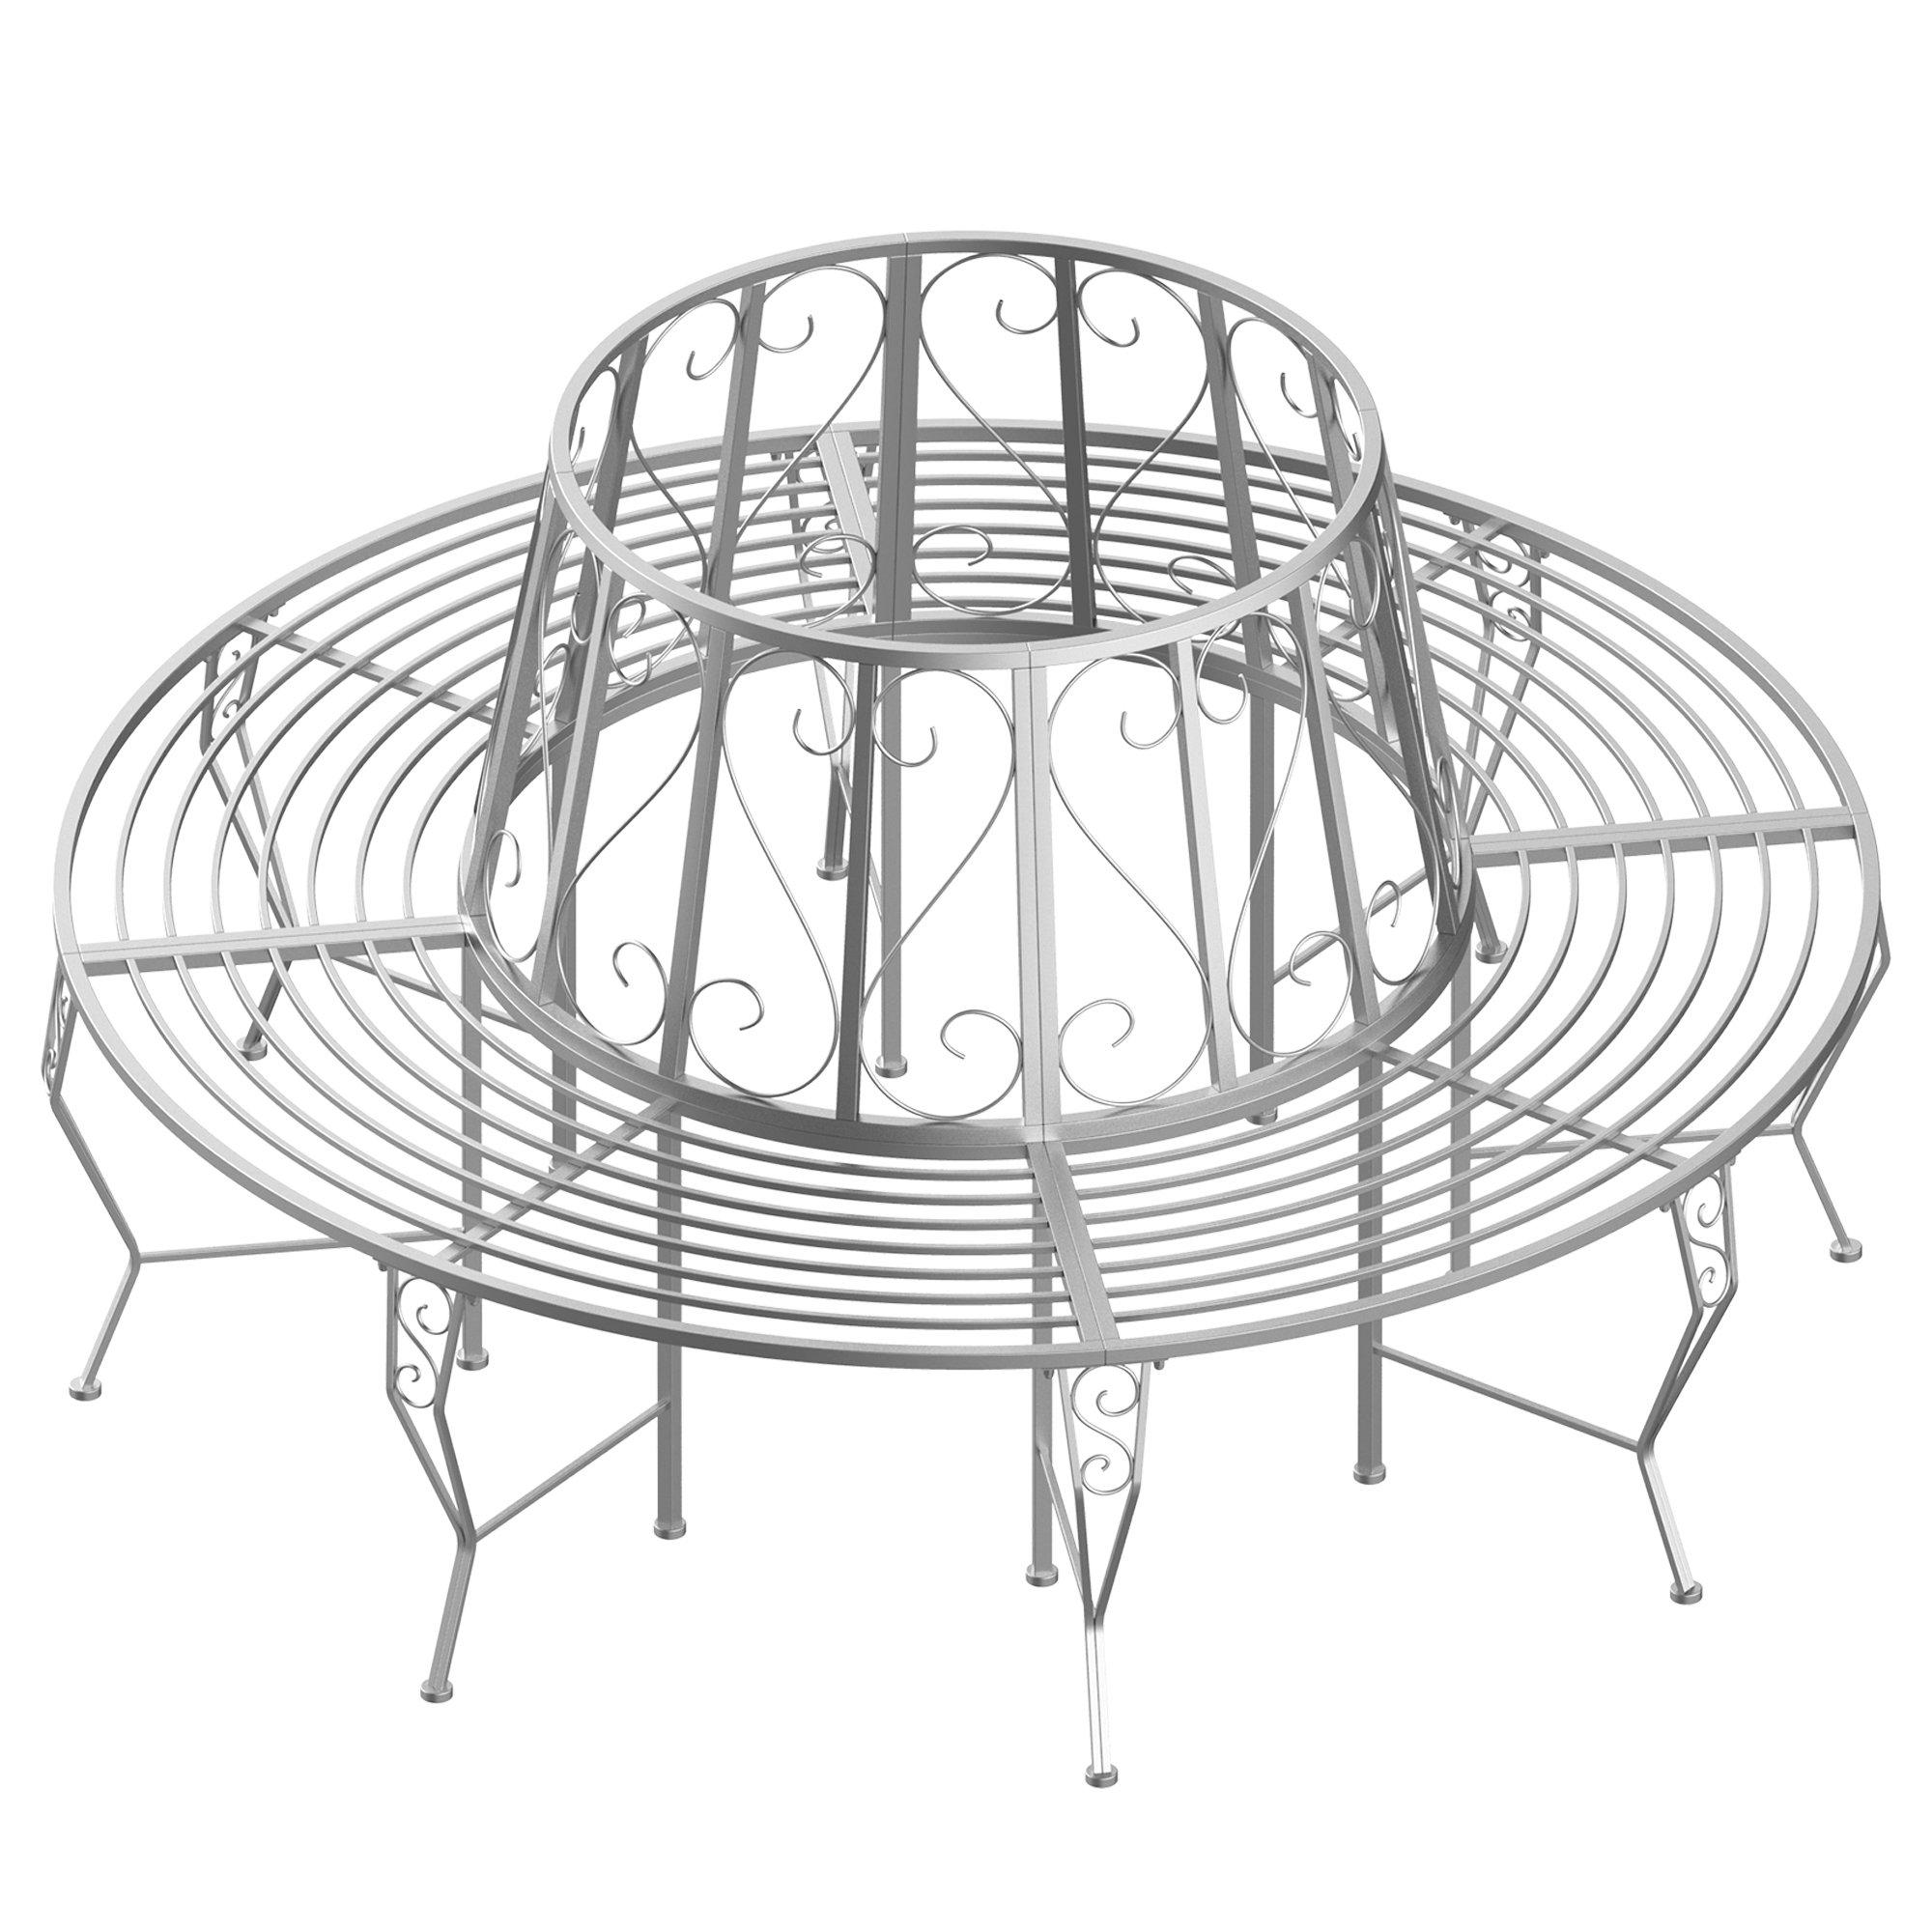 160cm Garden Round Tree Bench Outdoor Chair Metal Patio Circular Seat